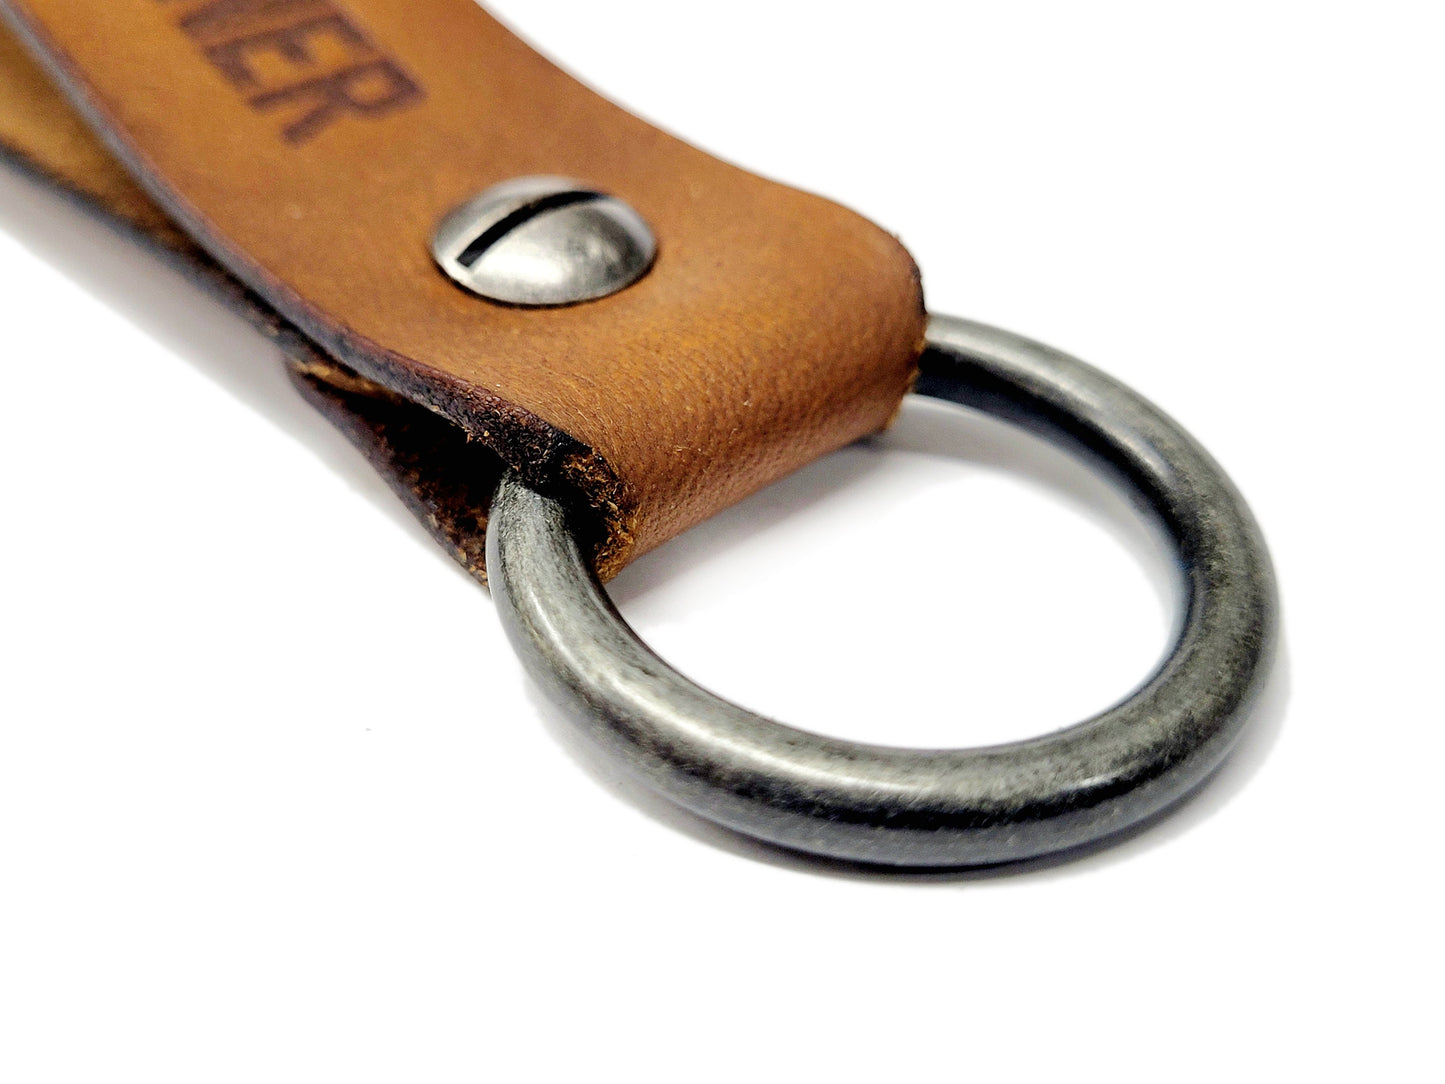 Oklahoma Sooners Boomer Sooner Leather Keychain | Handmade | Veg Tan Leather | Antique Nickel O Ring